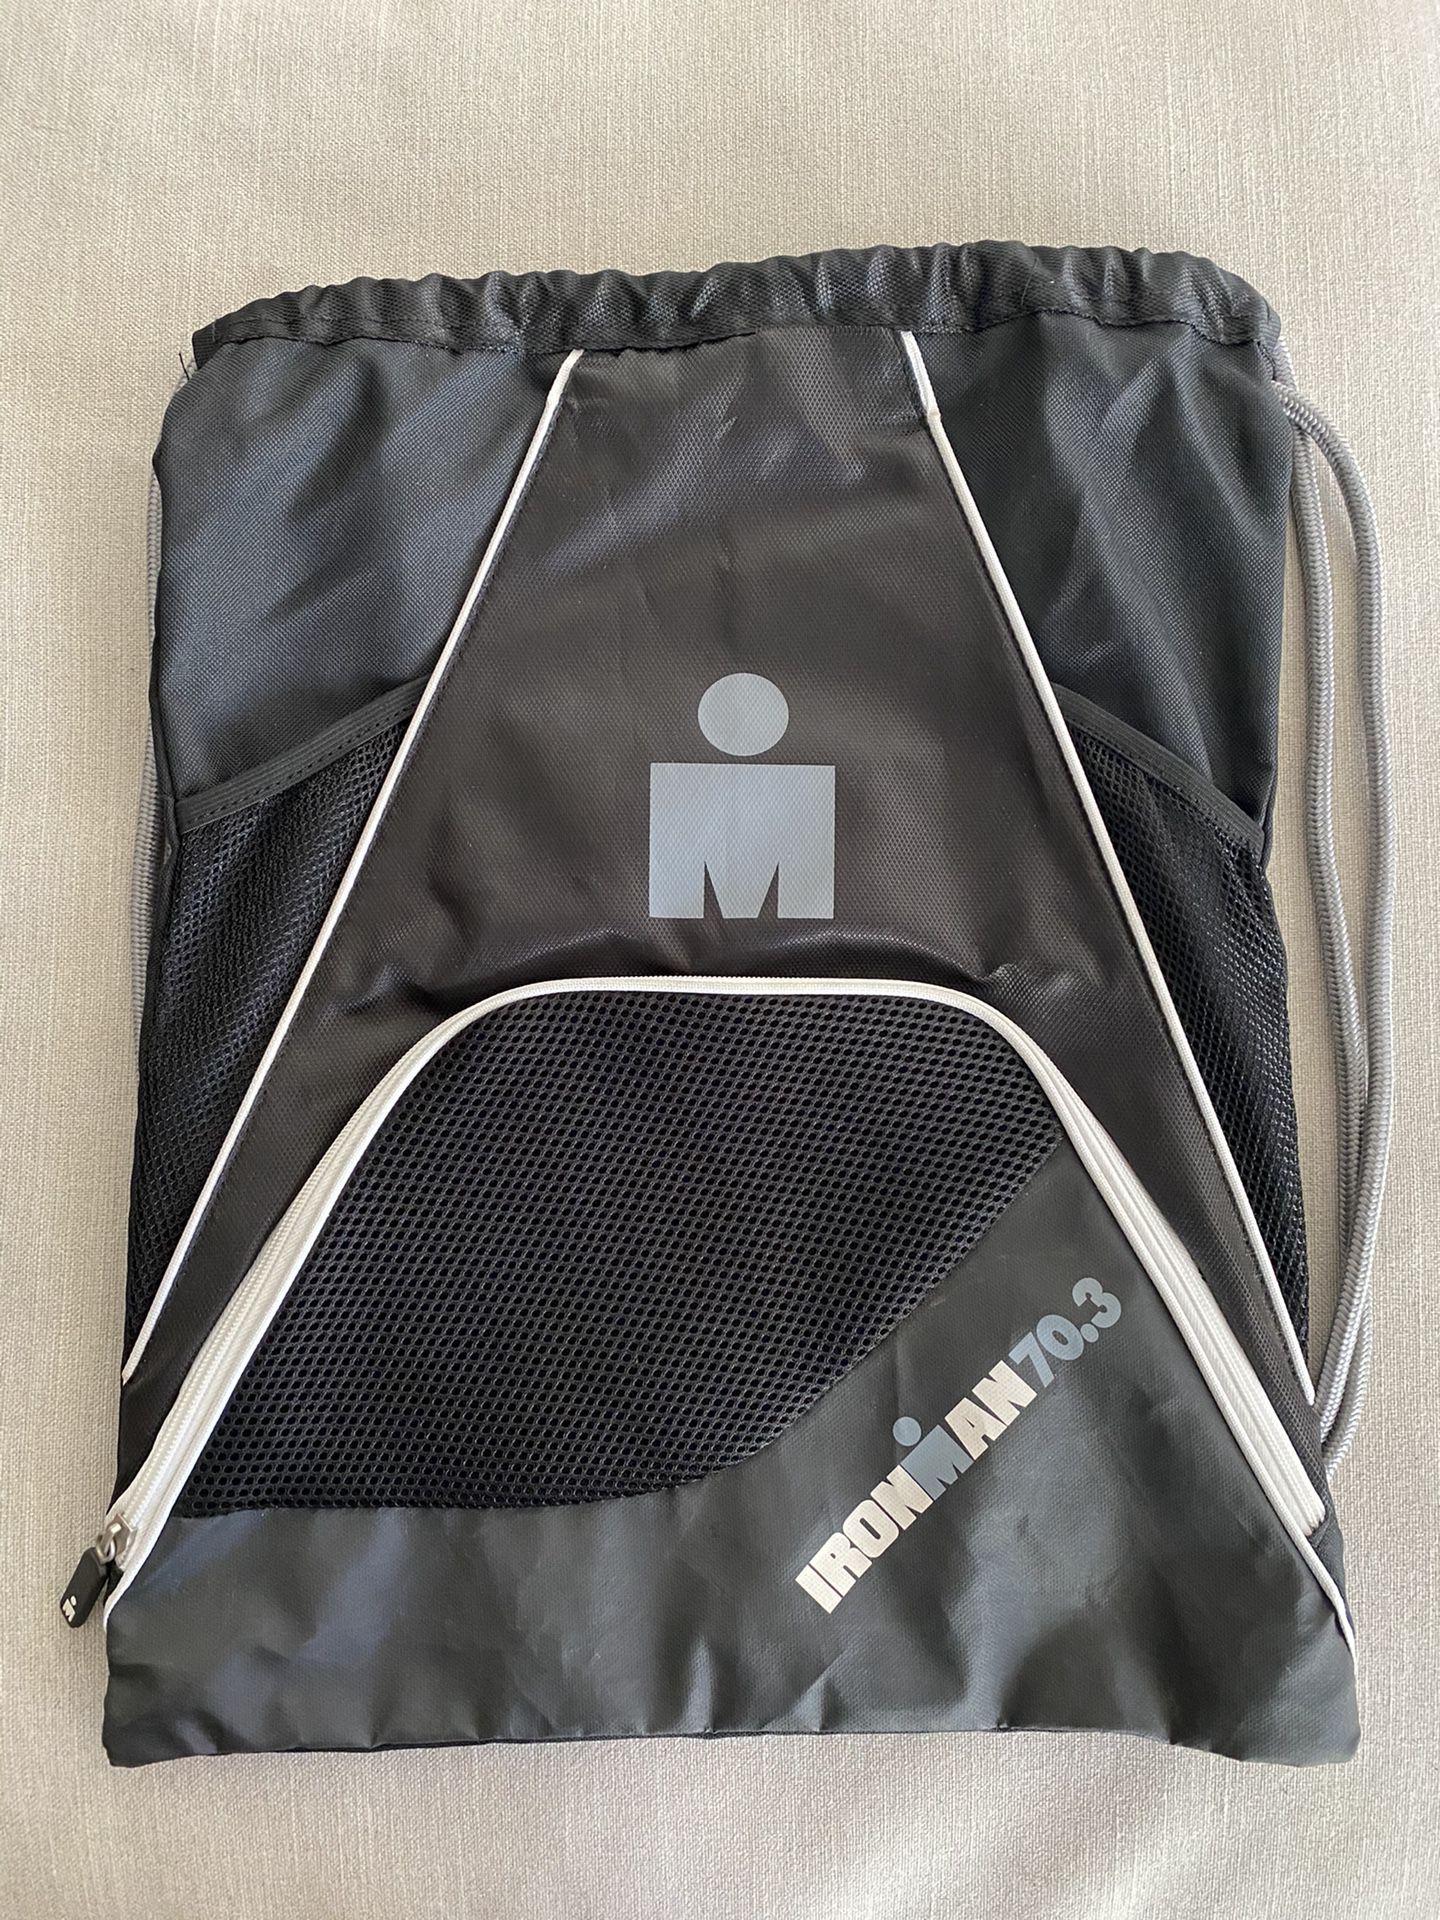 IRONMAN sling bag backpack